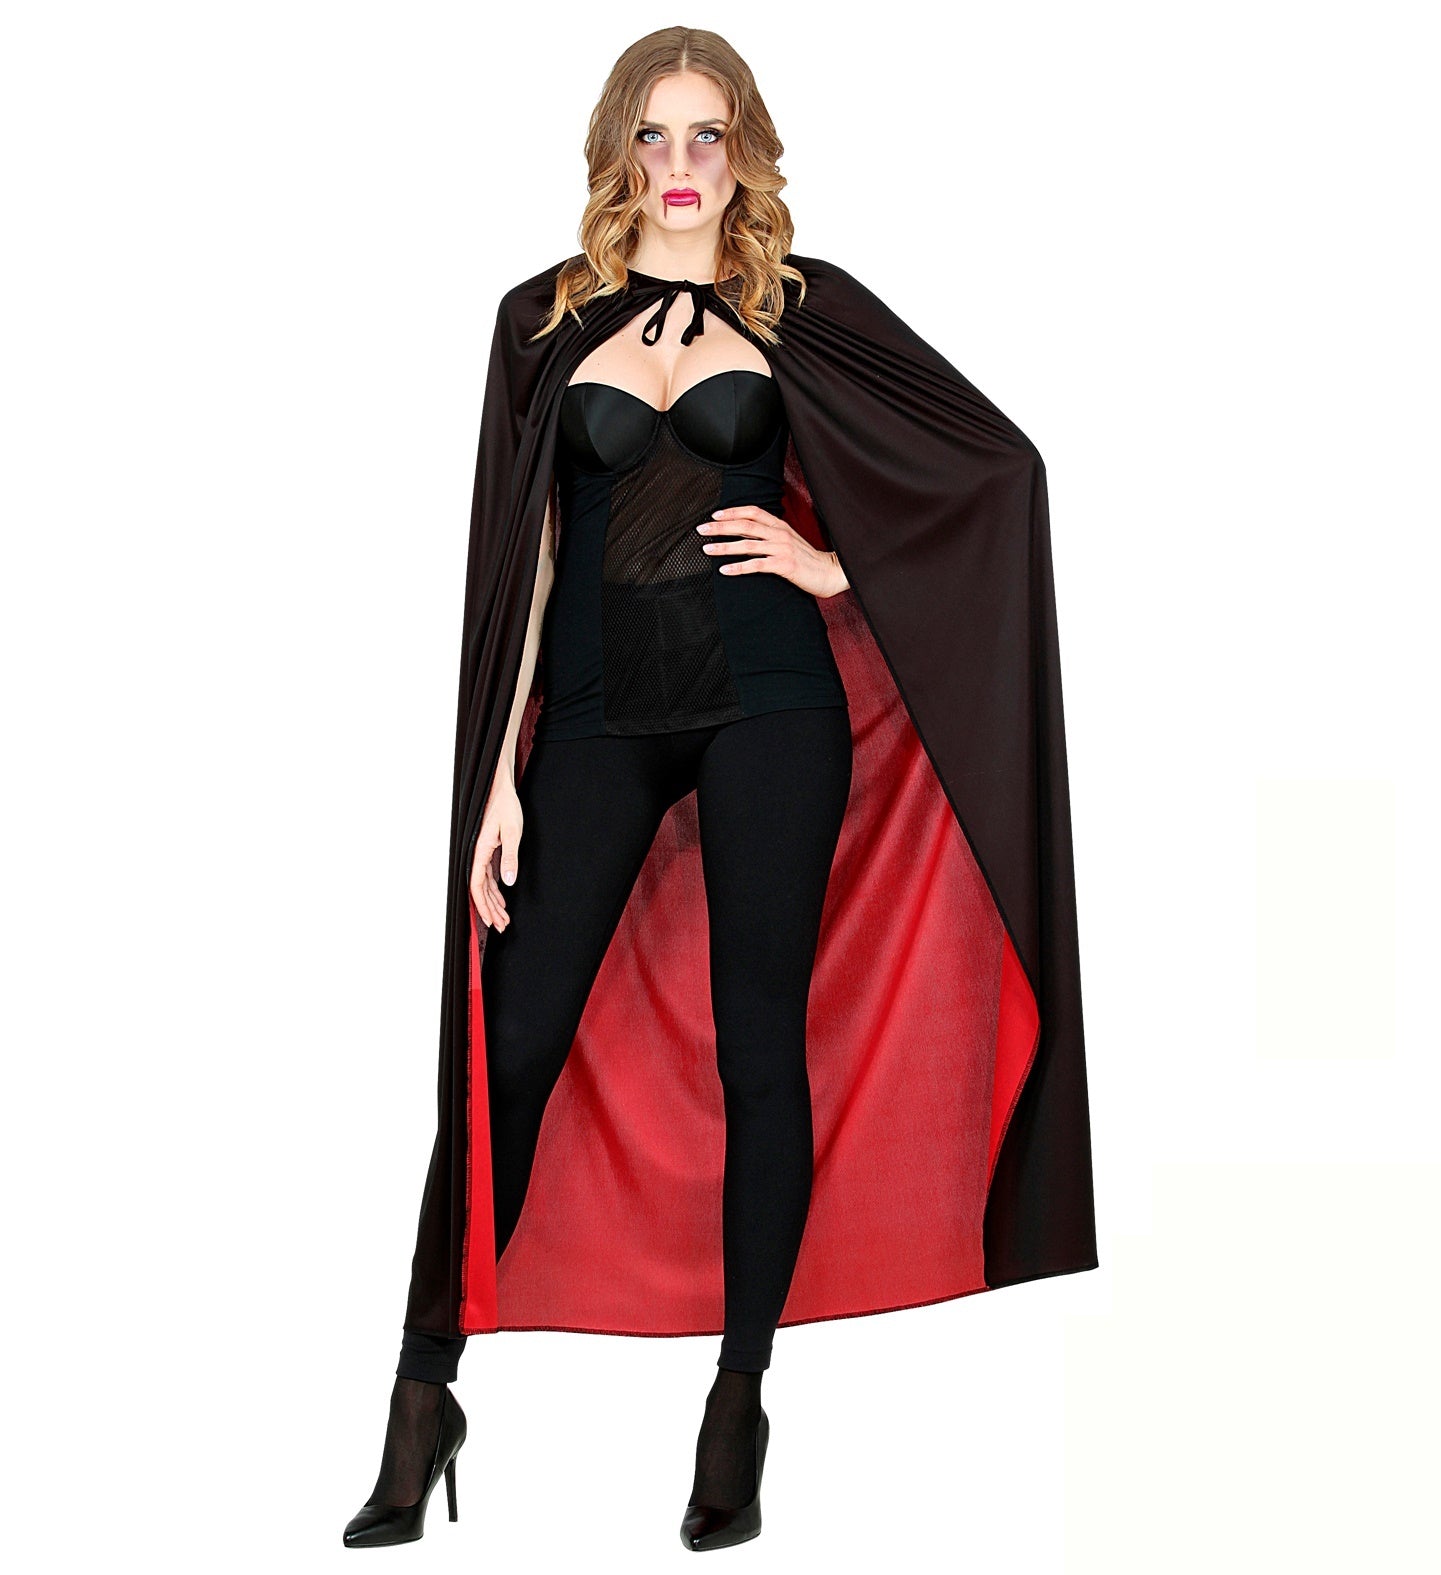 Widmann - Vampier & Dracula Kostuum - Omkeerbare Vampier Goochelaar Cape 130cm, Zwart / Rood - rood,zwart - One Size - Halloween - Verkleedkleding